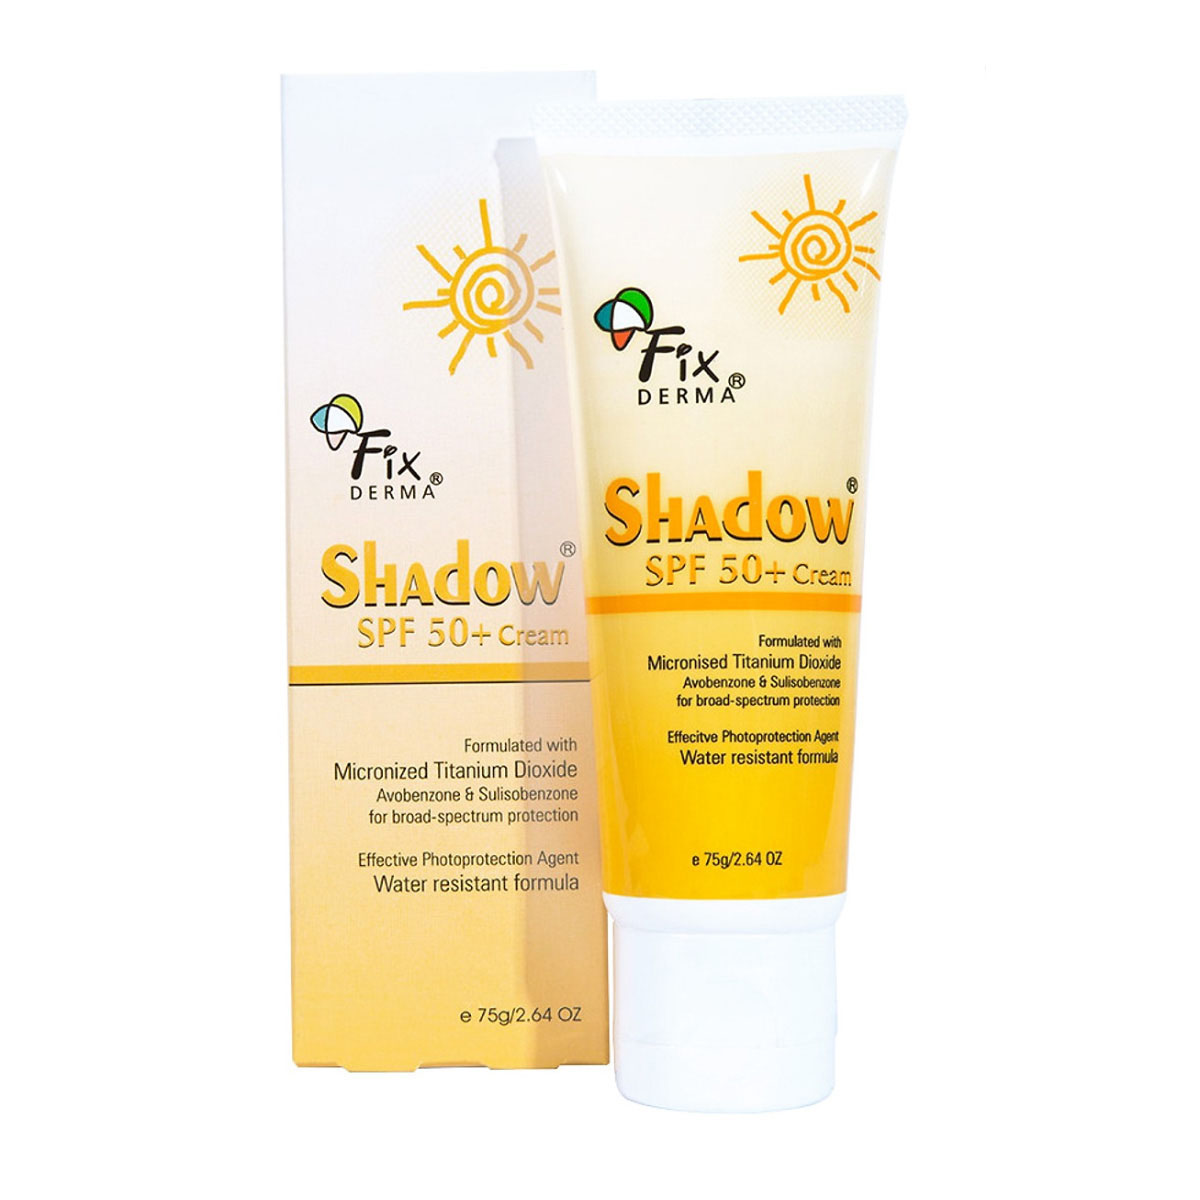 /fixderma-shadow-spf-50-cream